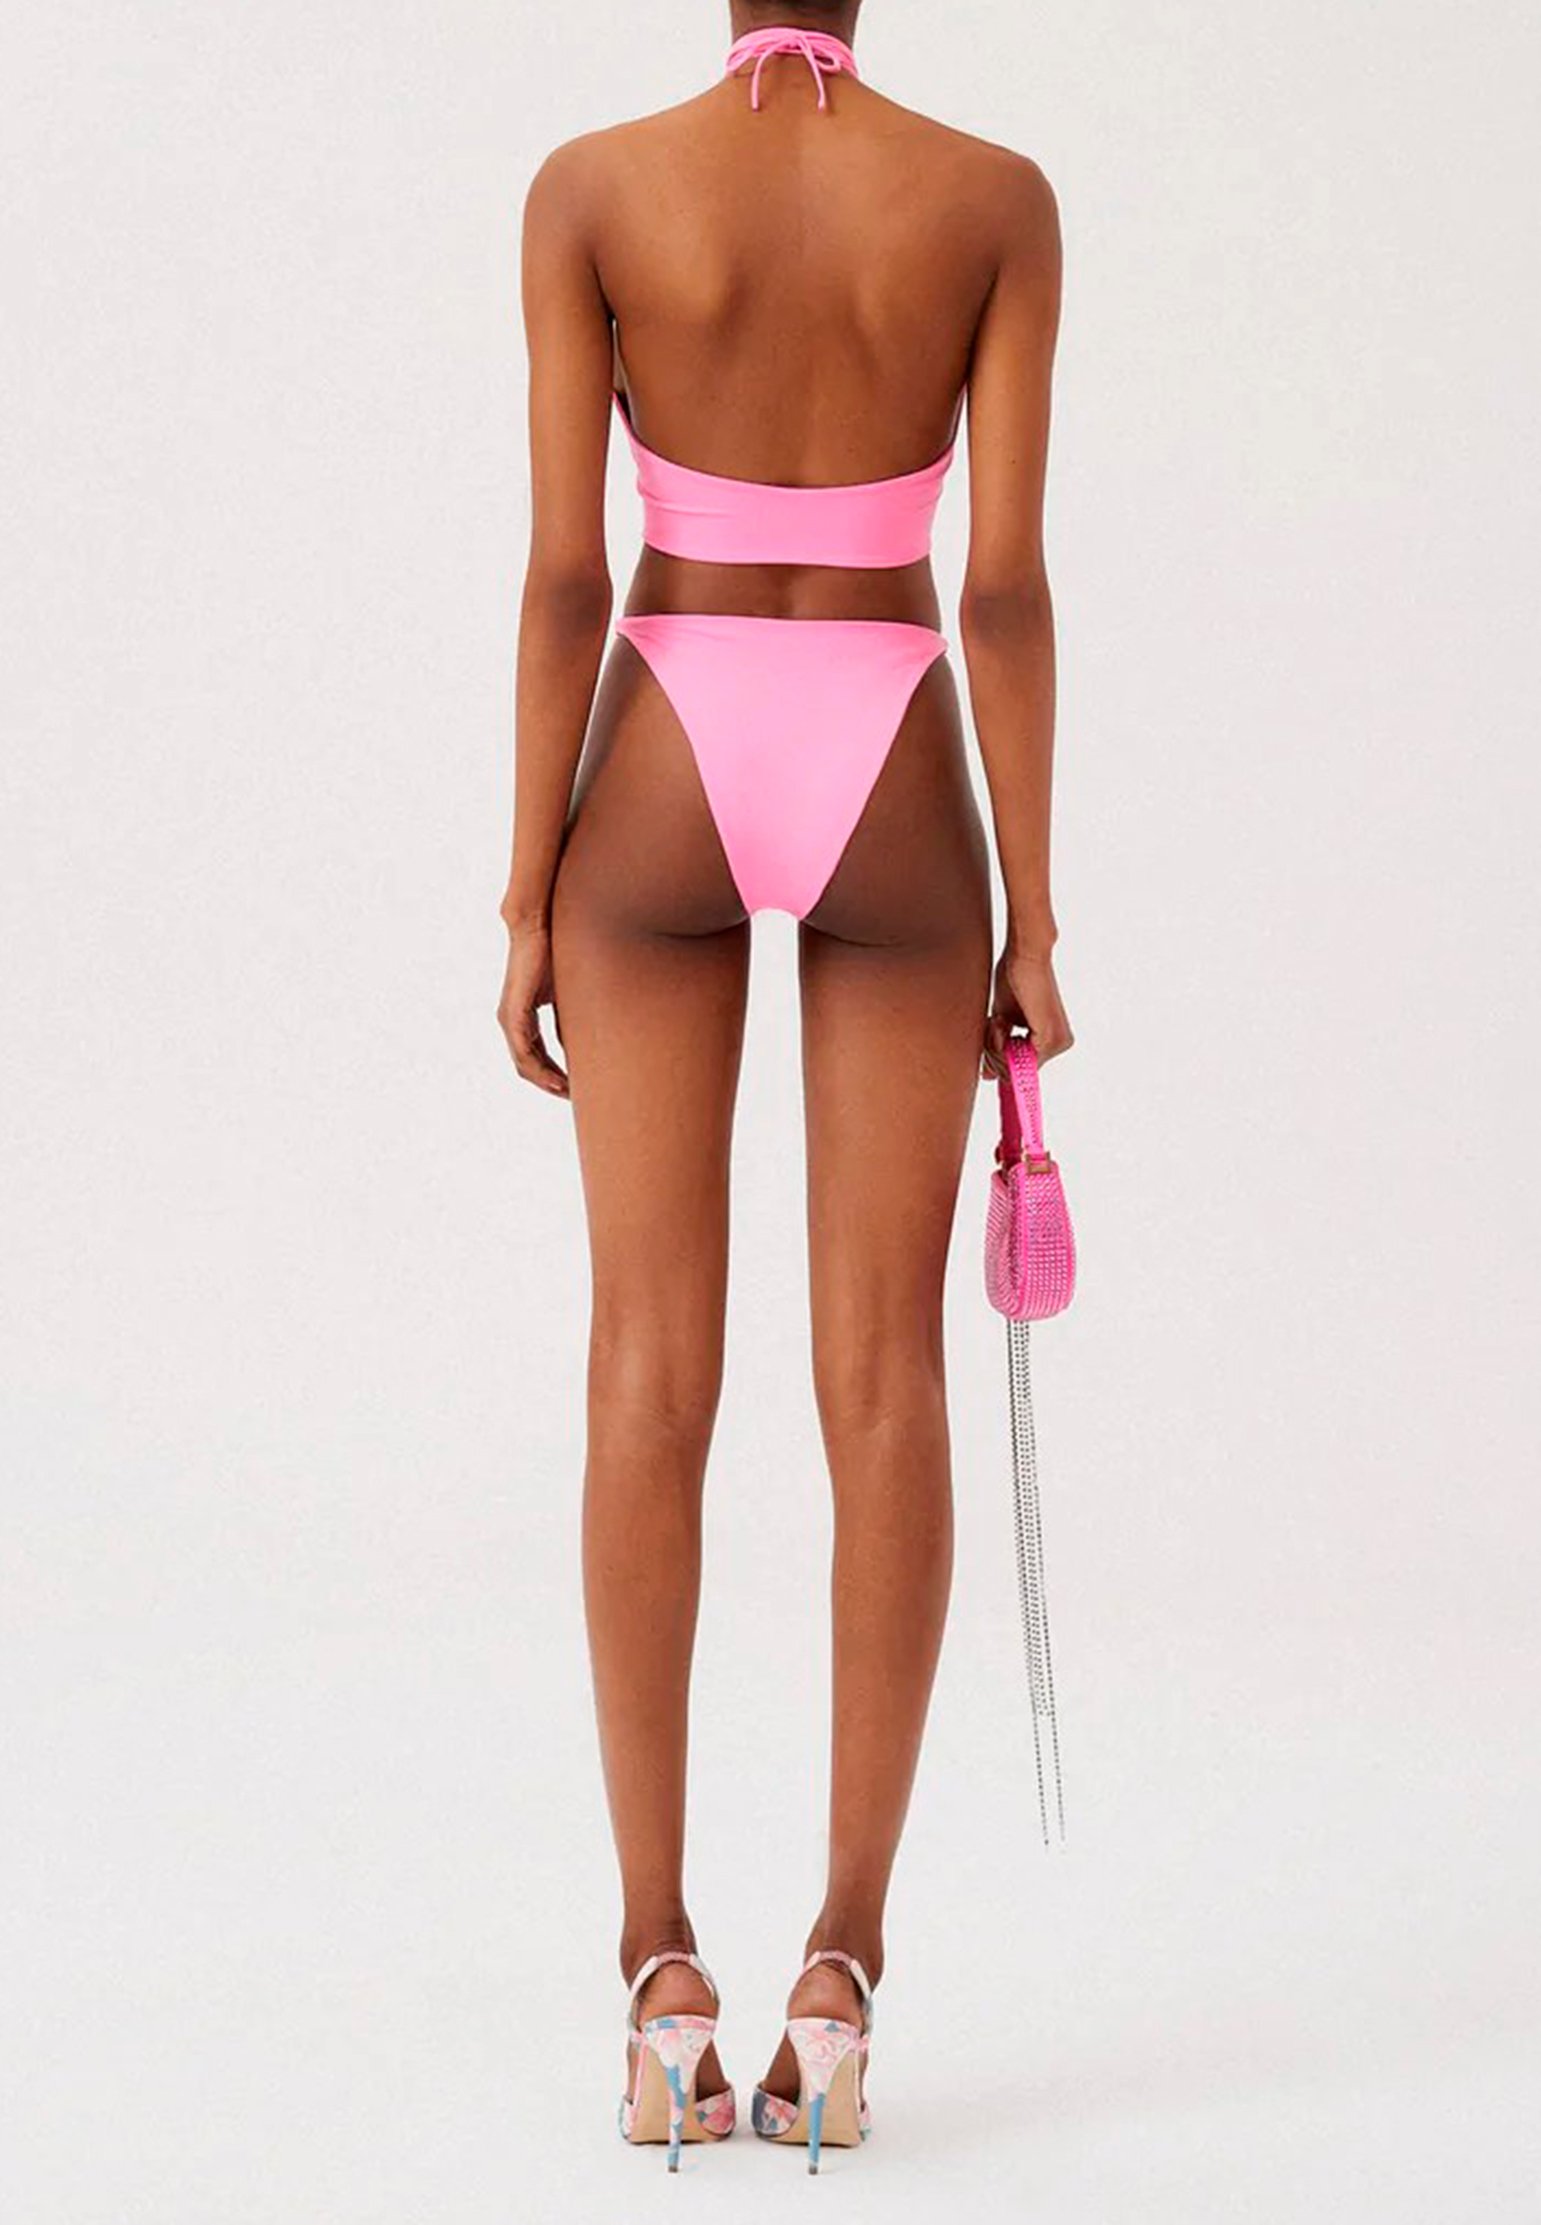 Bottom swim MAGDA BUTRYM Color: pink (Code: 1380) in online store Allure